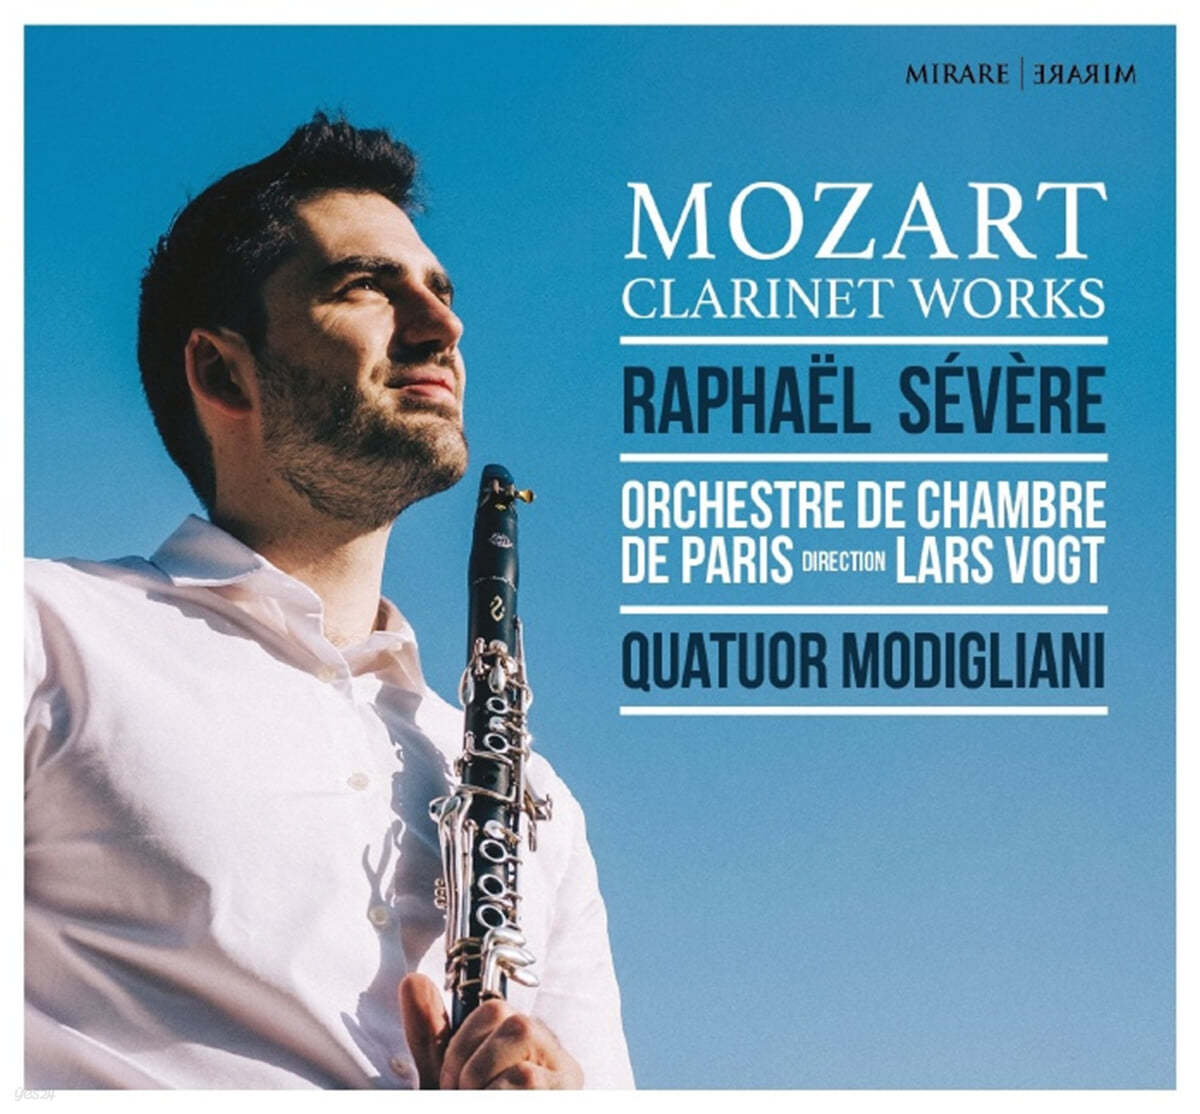 Raphael Severe 모차르트: 클라리넷 협주곡 K.622, 클라리넷 5중주 K.581 (Mozart: Clarinet Works)